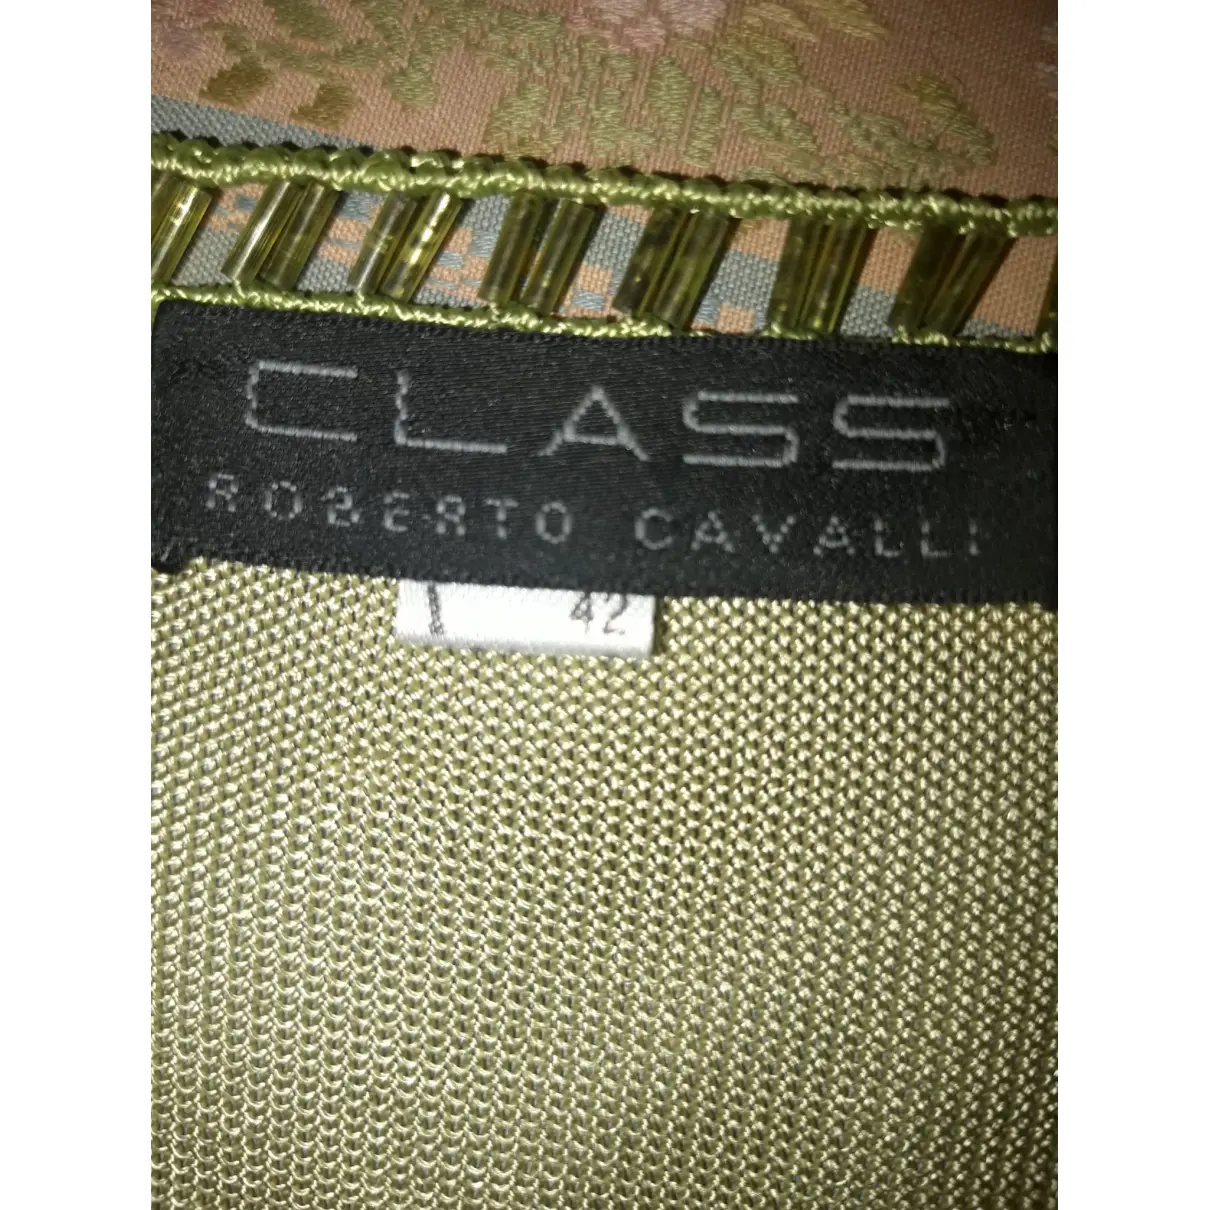 Knitwear Class Cavalli